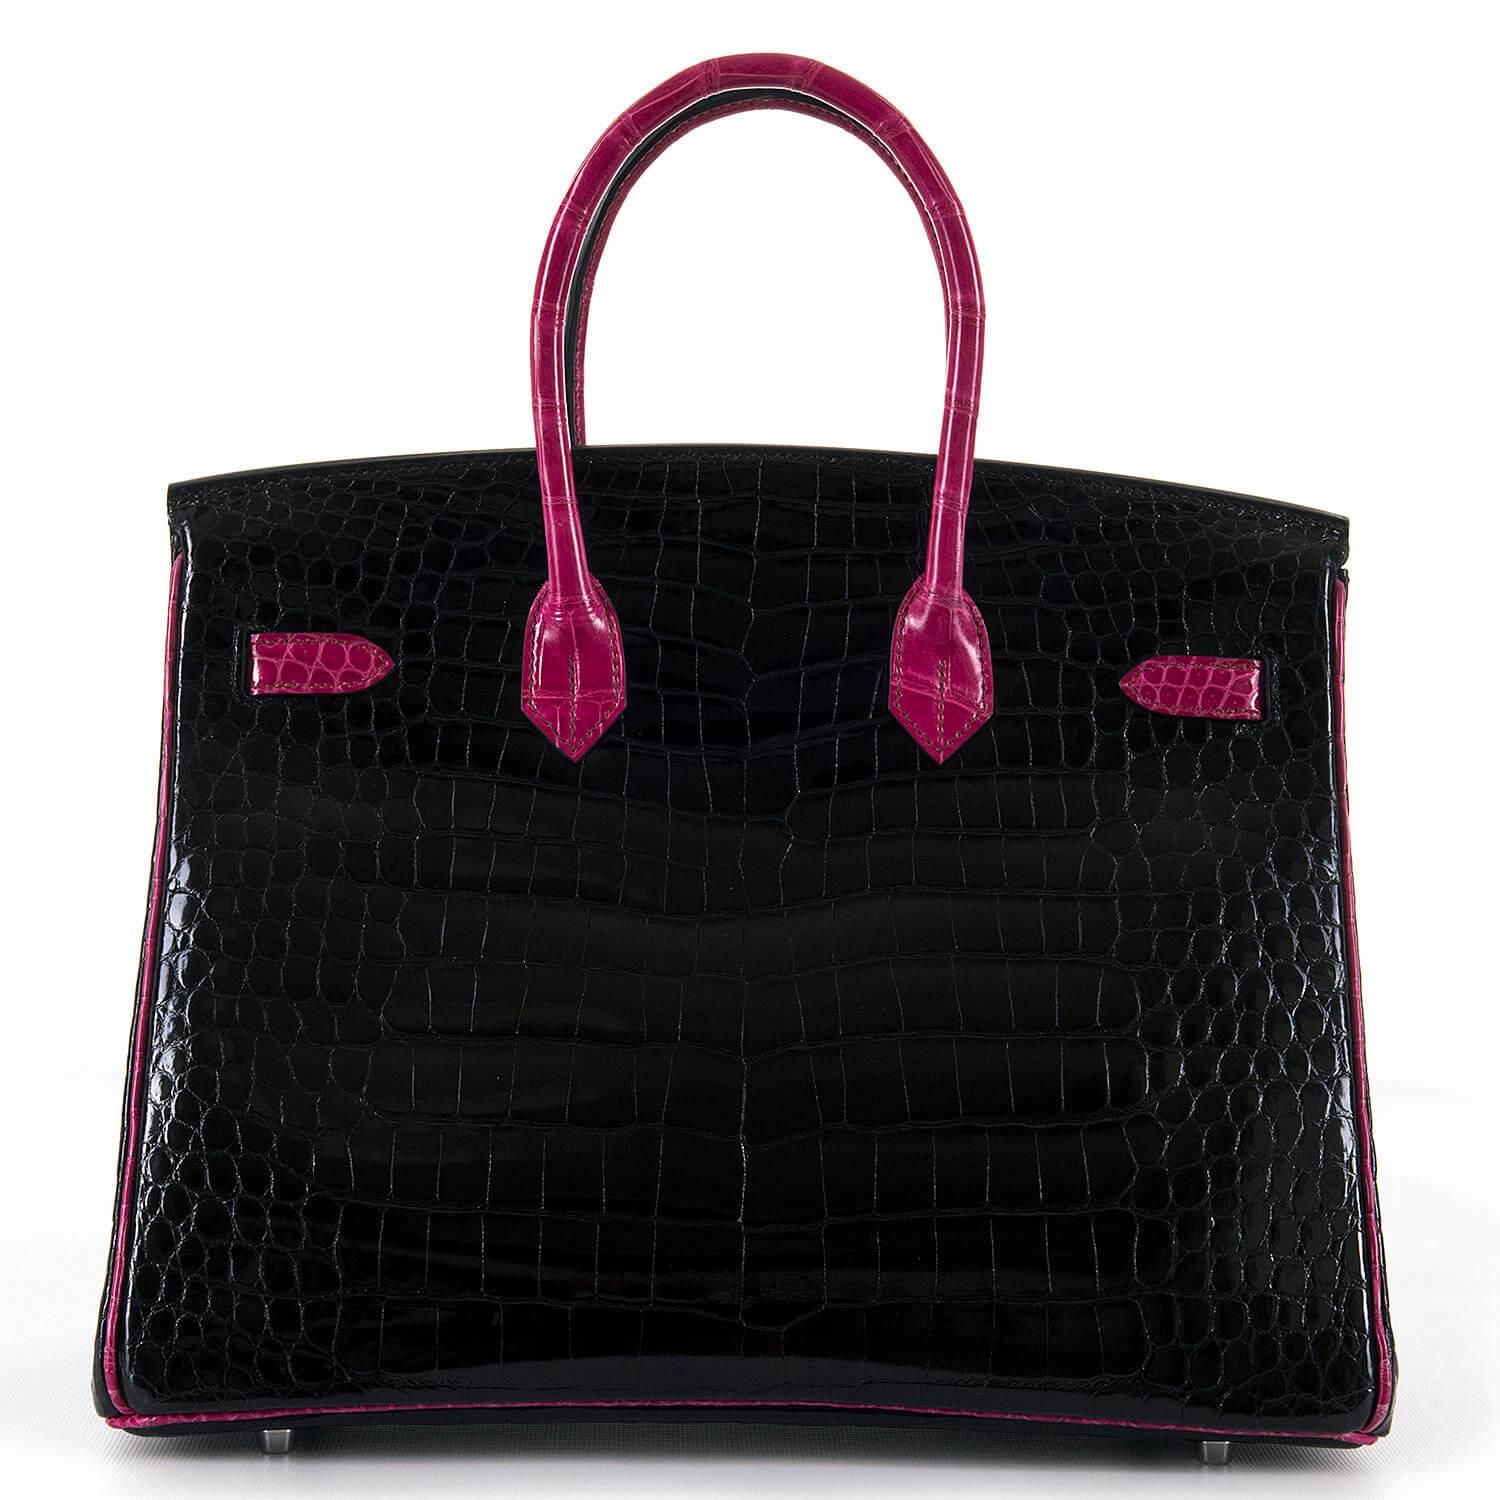 Hermes Limited Edition 35cm Shiny Black Crocodile Birkin Bag (Schwarz)